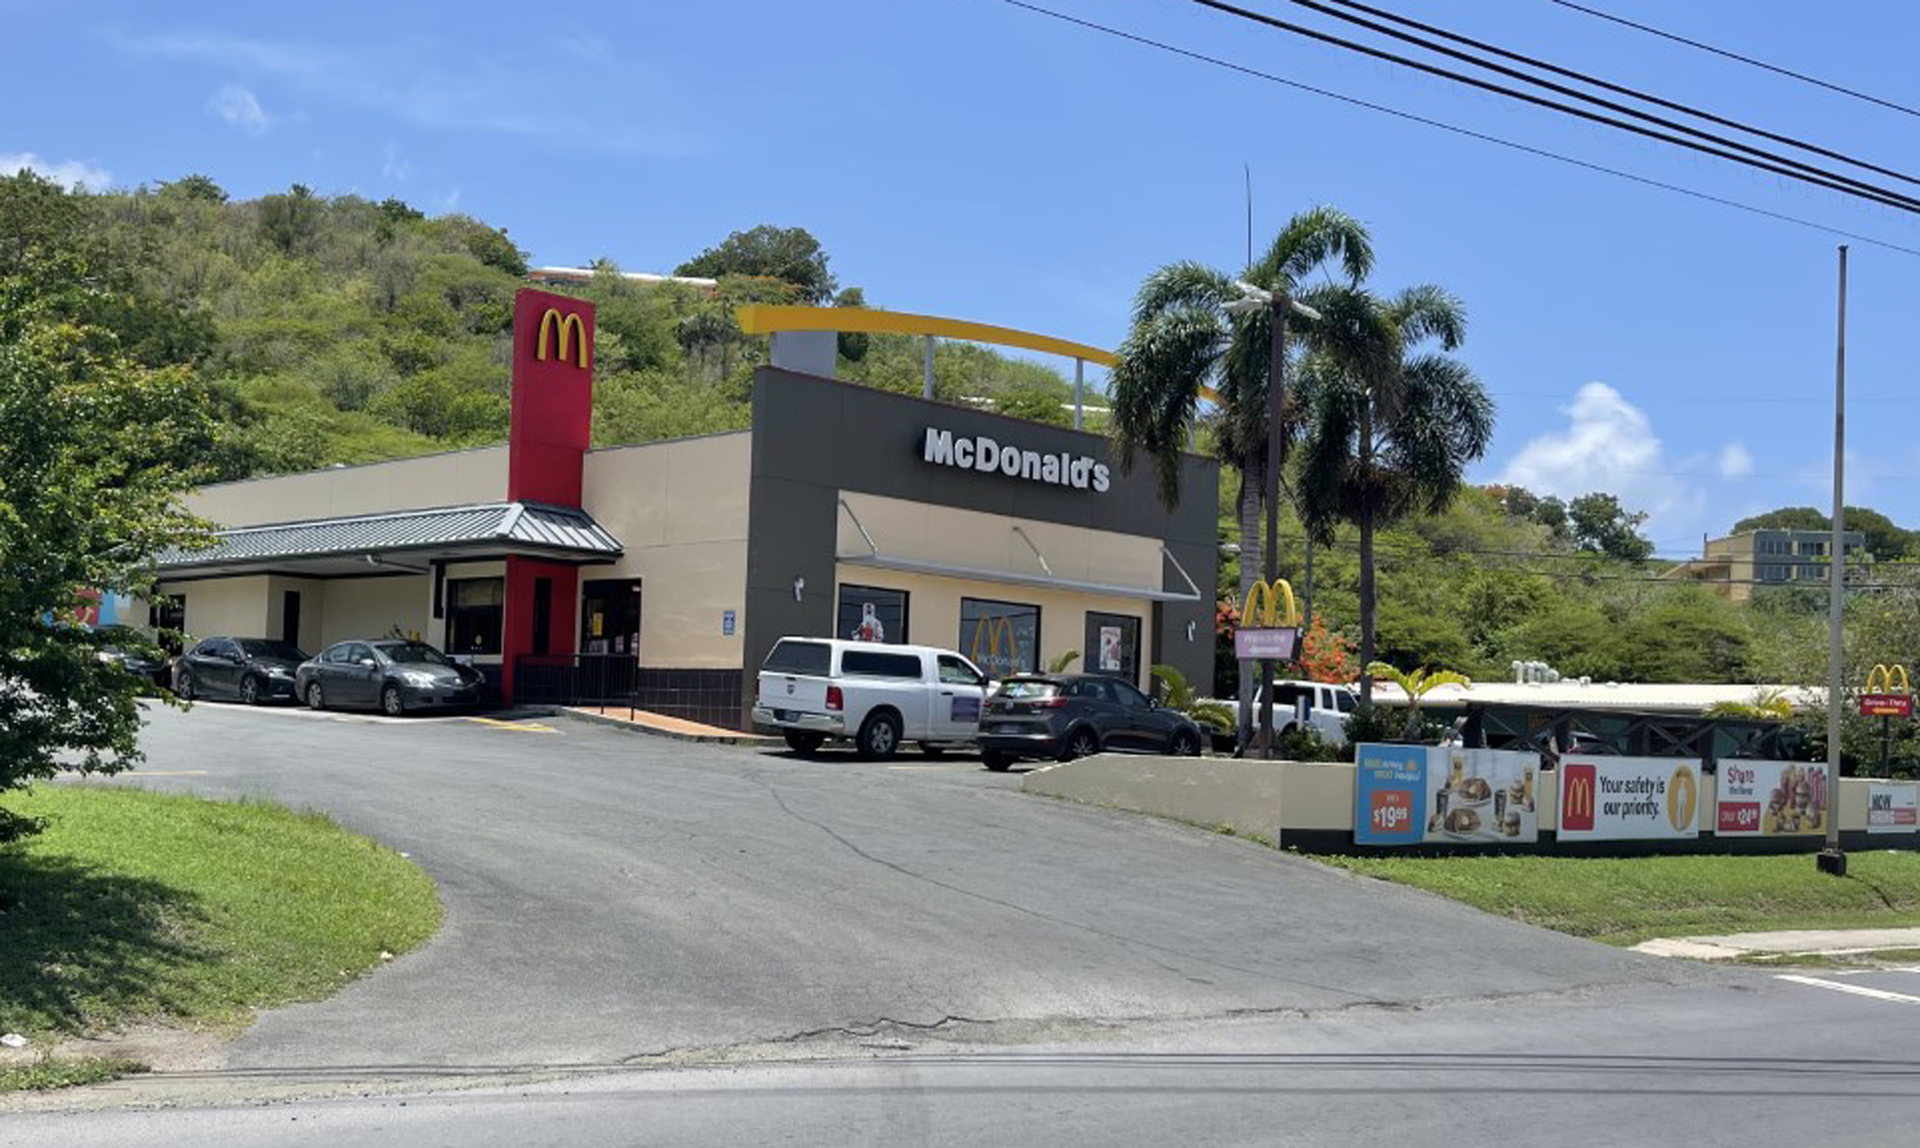 Deft Thief Climbs Through Drive-Thru Window To Rob McDonald's Golden Rock